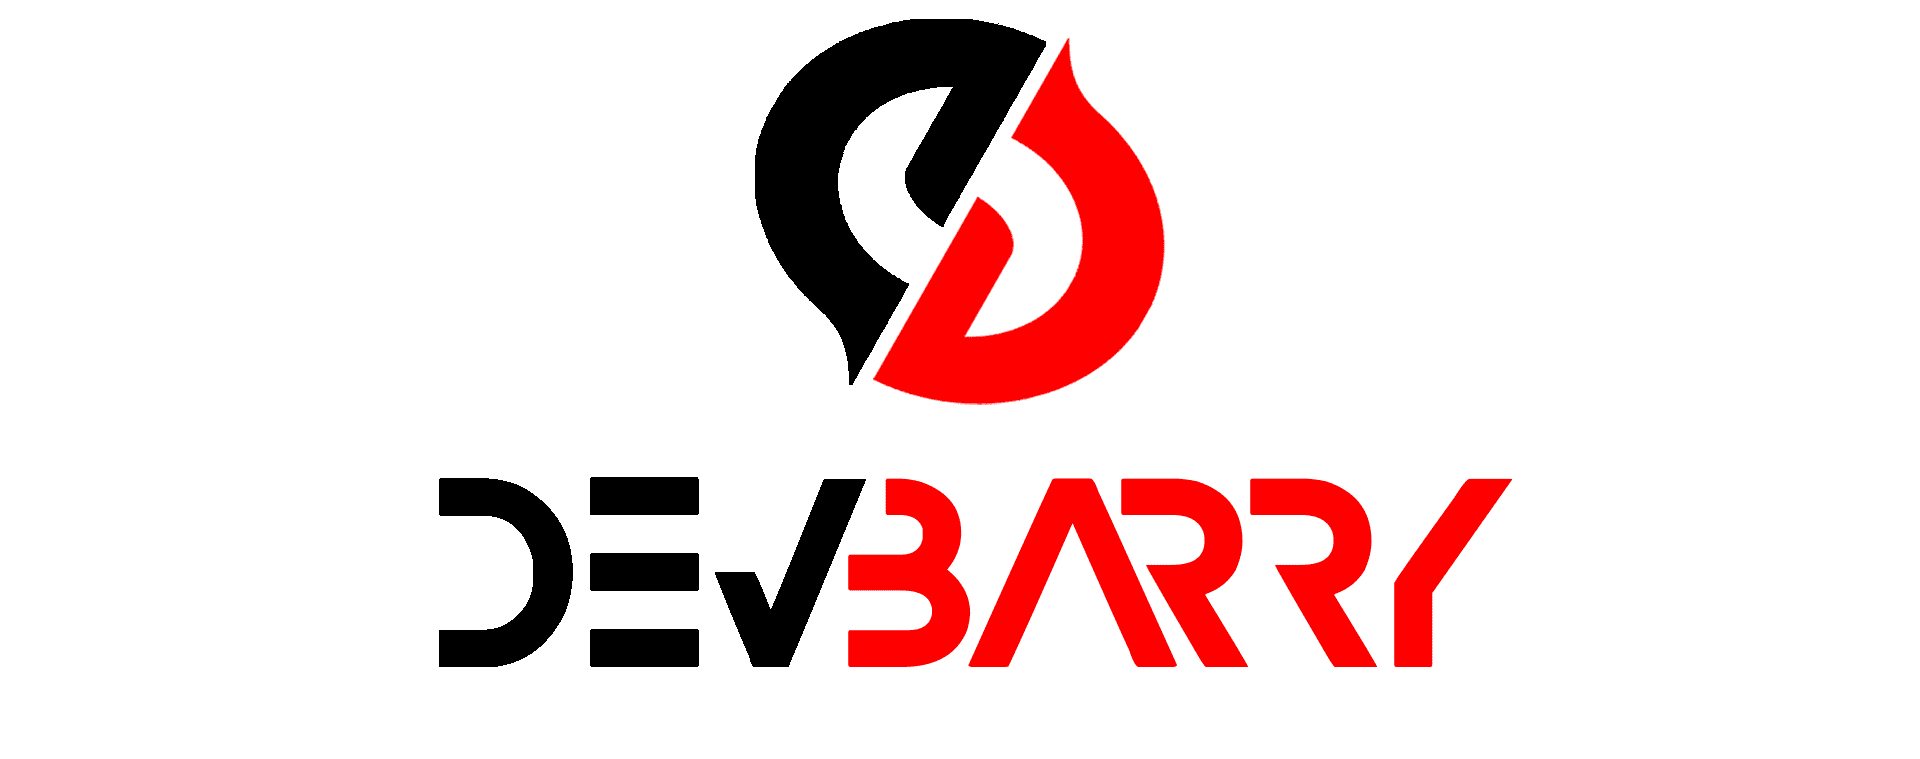 DevBarry Logo